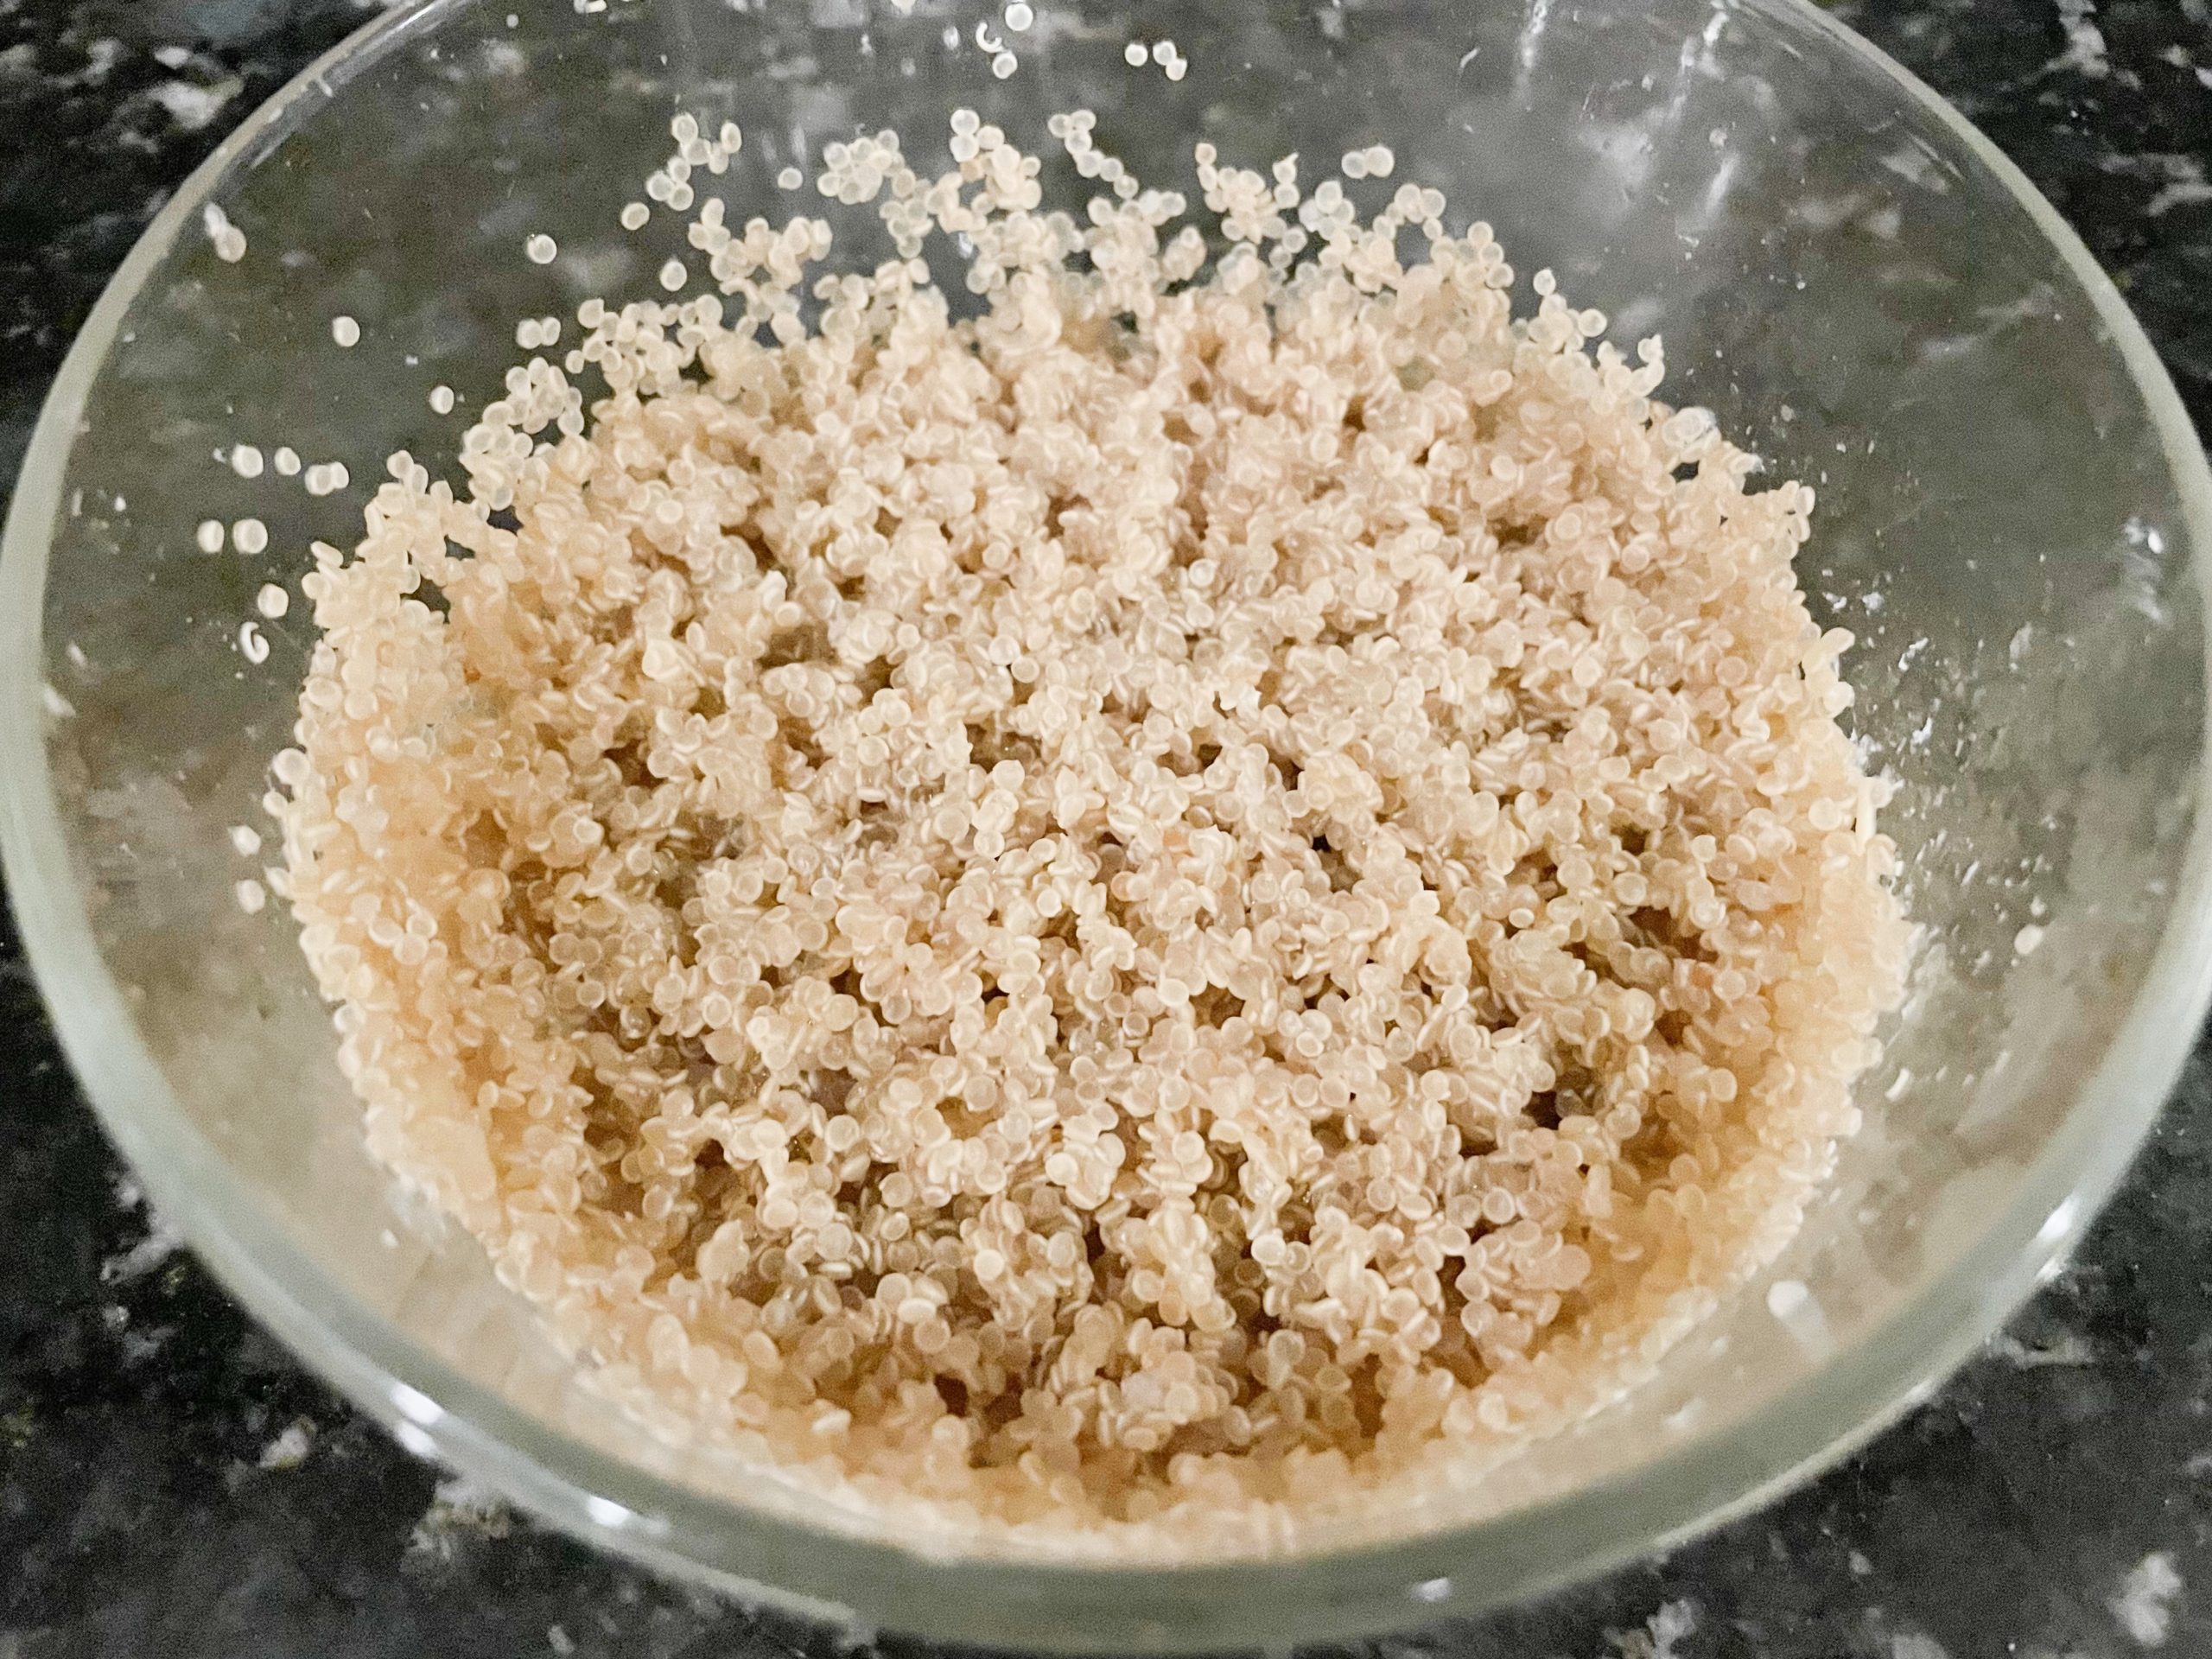 Microwaved quinoa.